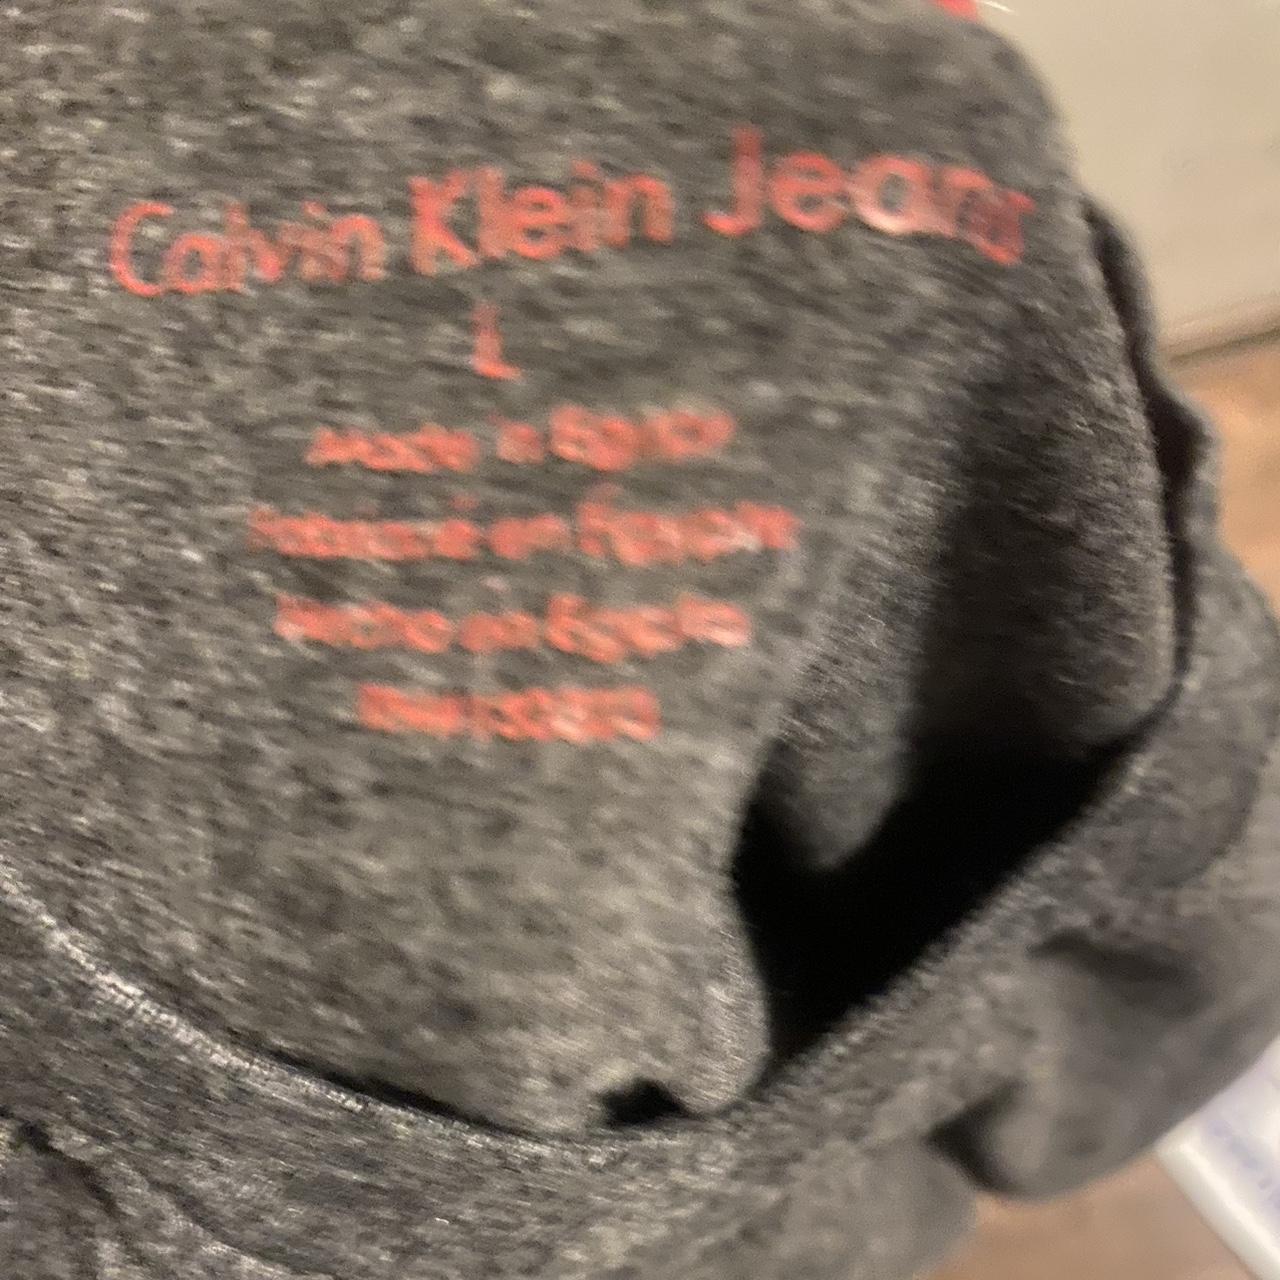 Calvin Klein Jeans - Kids T-shirt